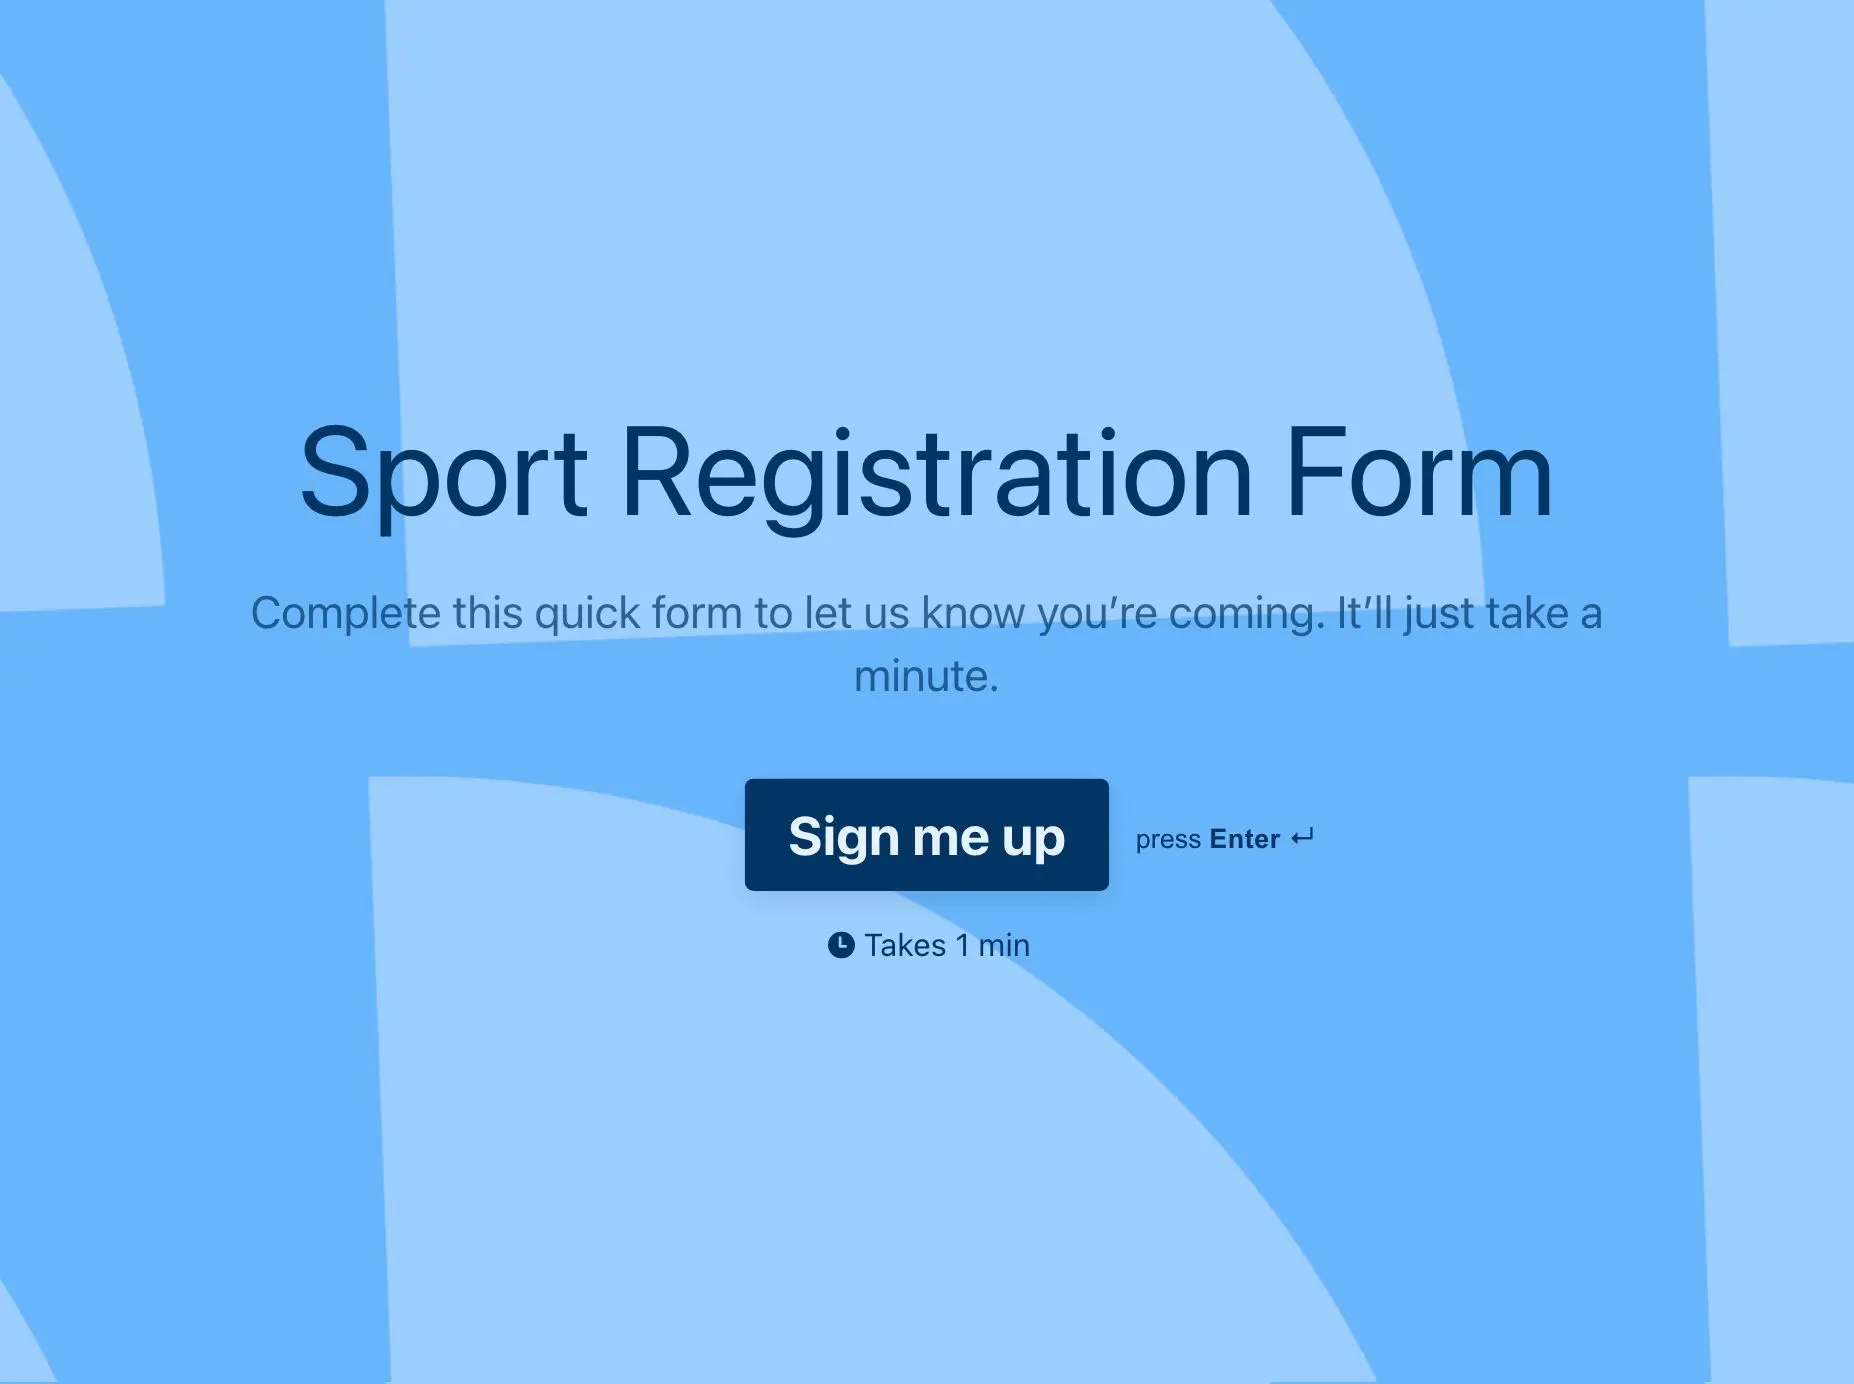 Sport Registration Form Template Hero